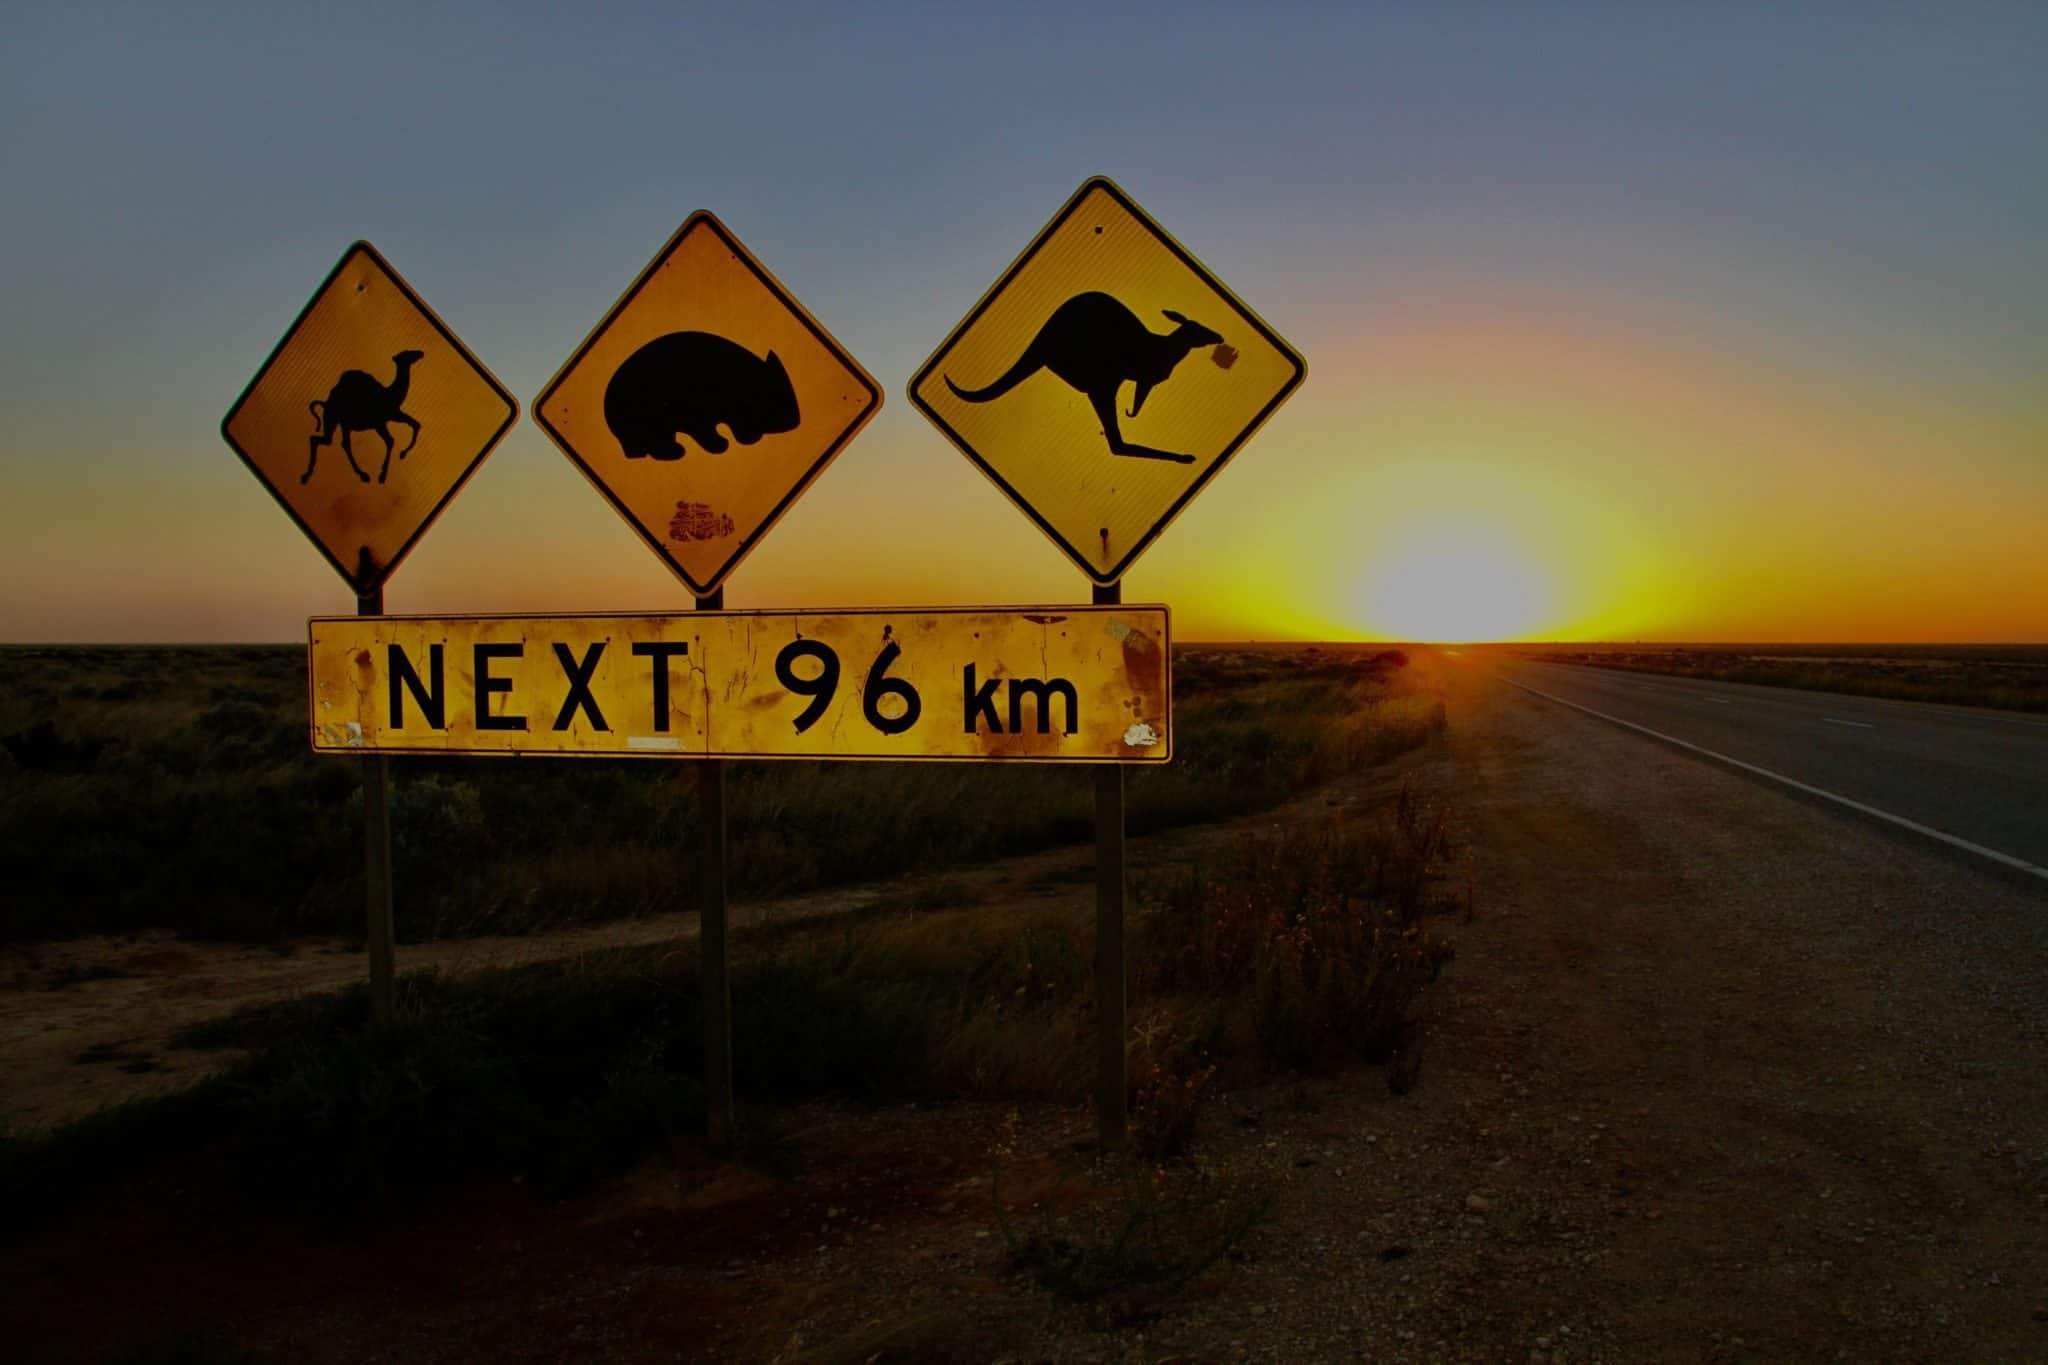 Nulllarbor Camel, Wombat and Kangaroo Roadsign on Highway at sunset